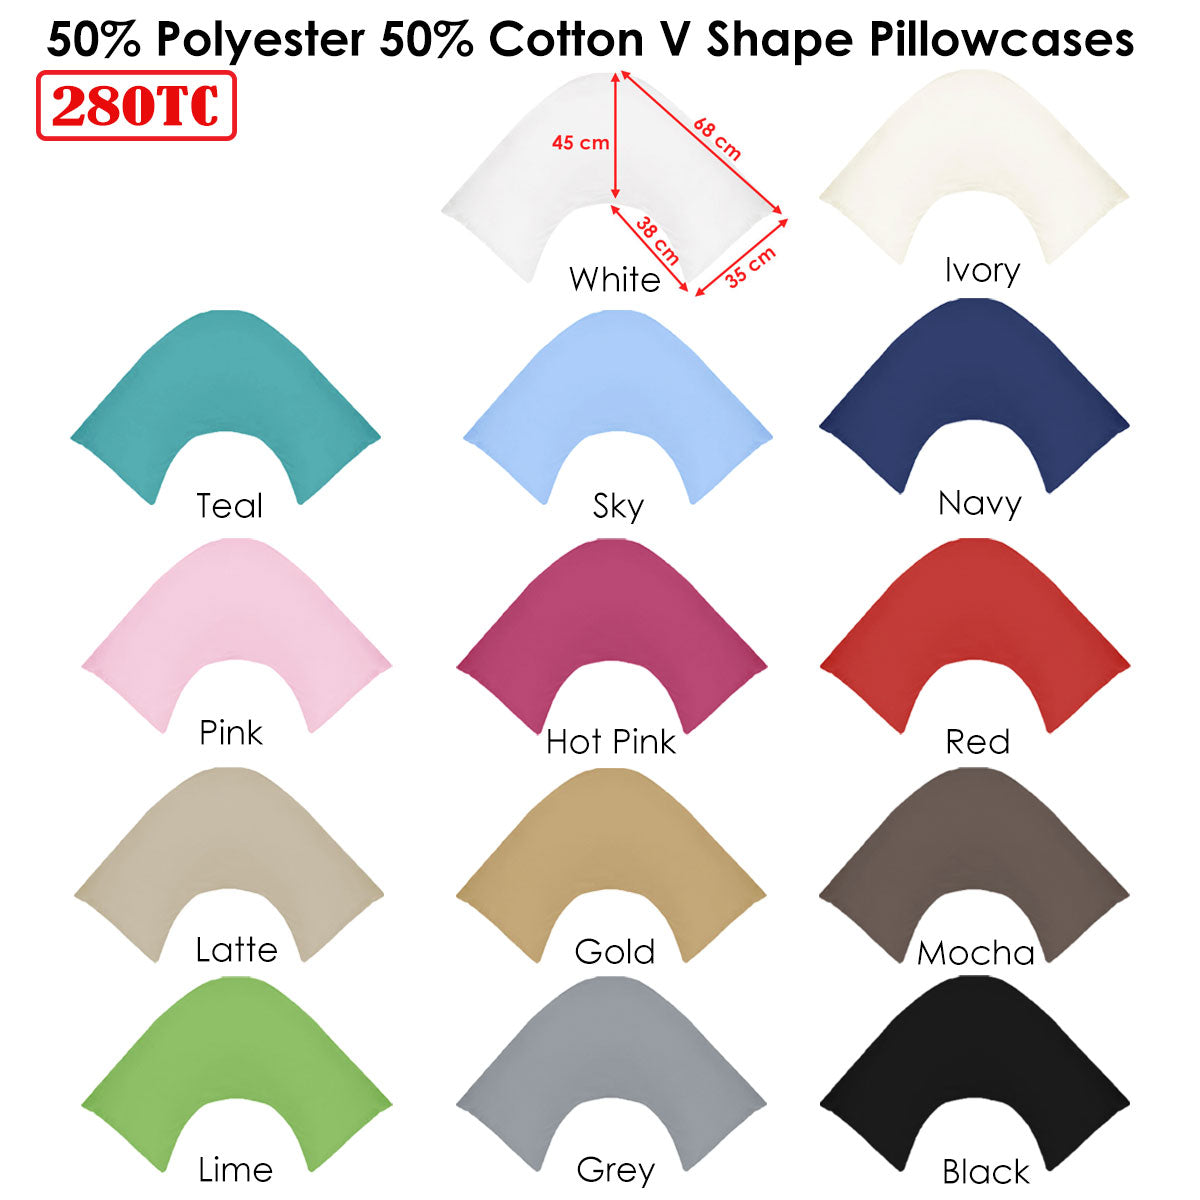 280TC Polyester Cotton V Shape Pillowcase Grey